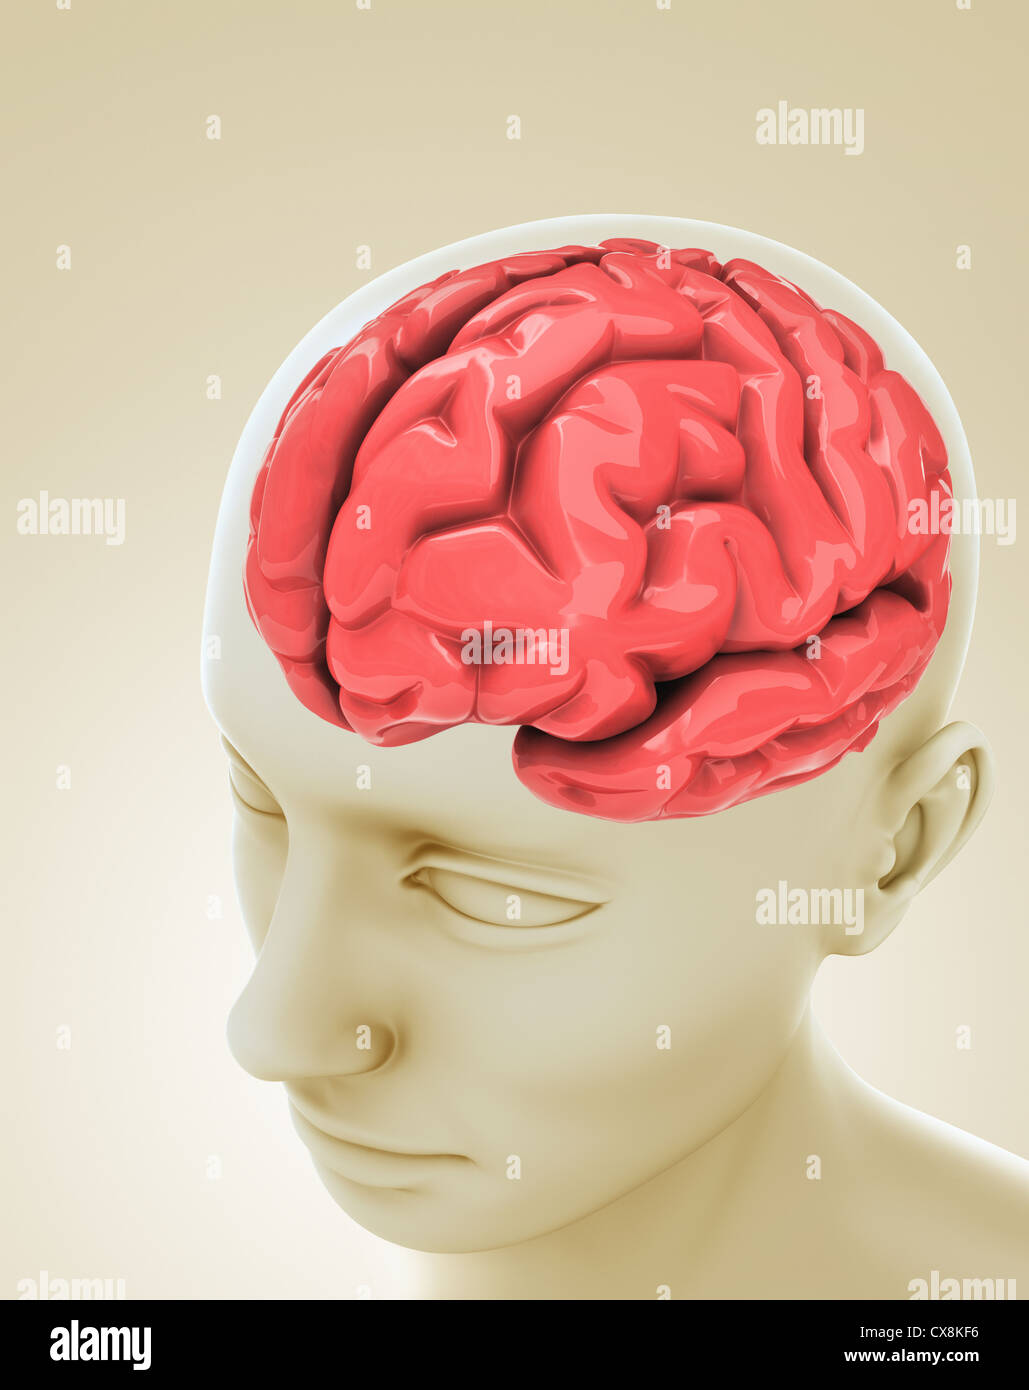 Head with a brain inside. Stock Photo